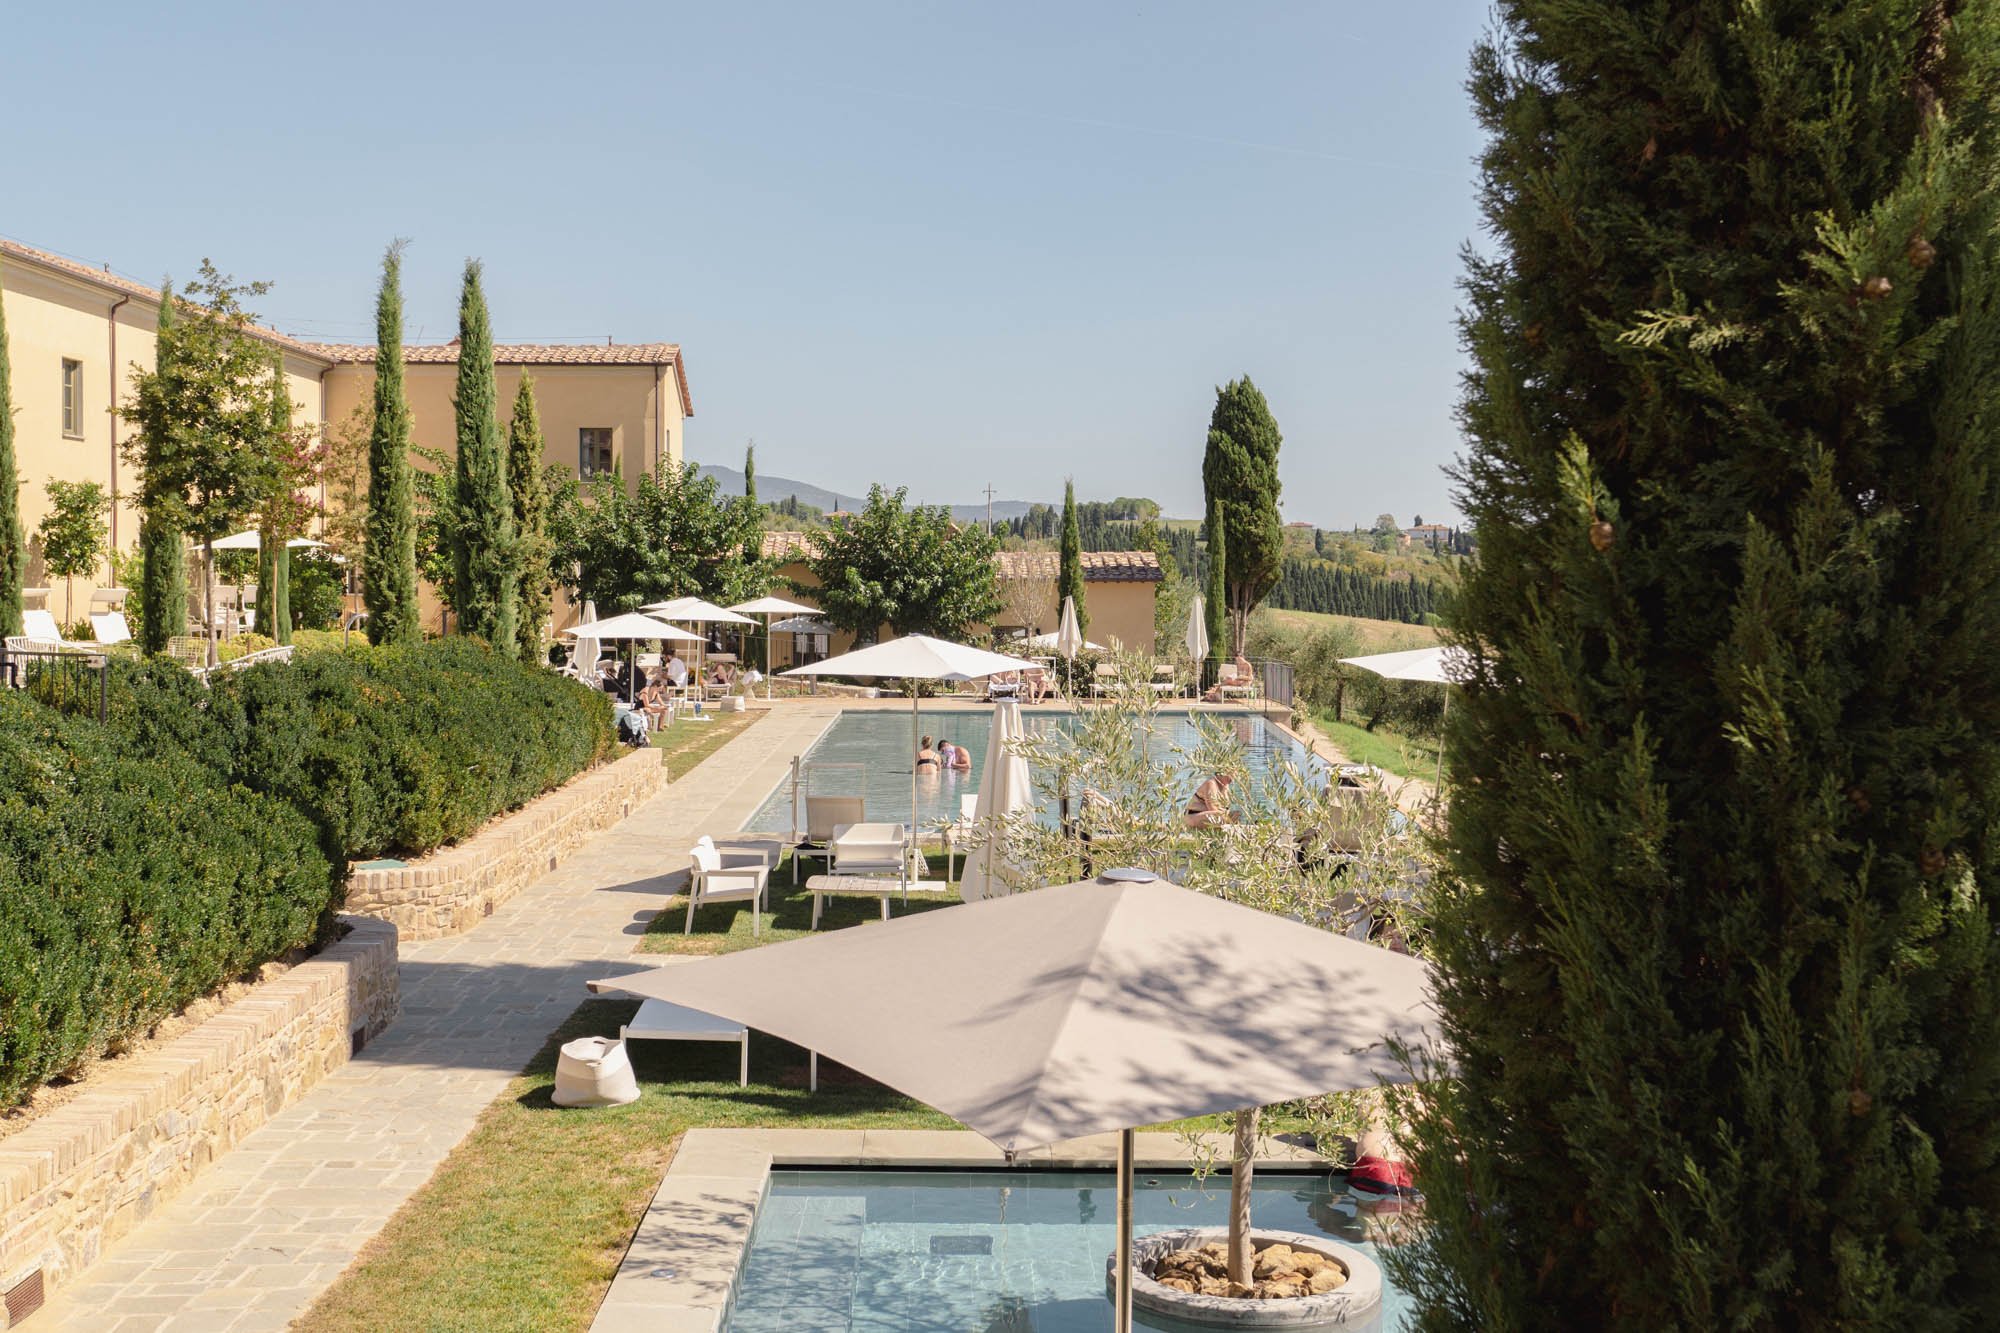 Villa Petriolo | A Hotel Review